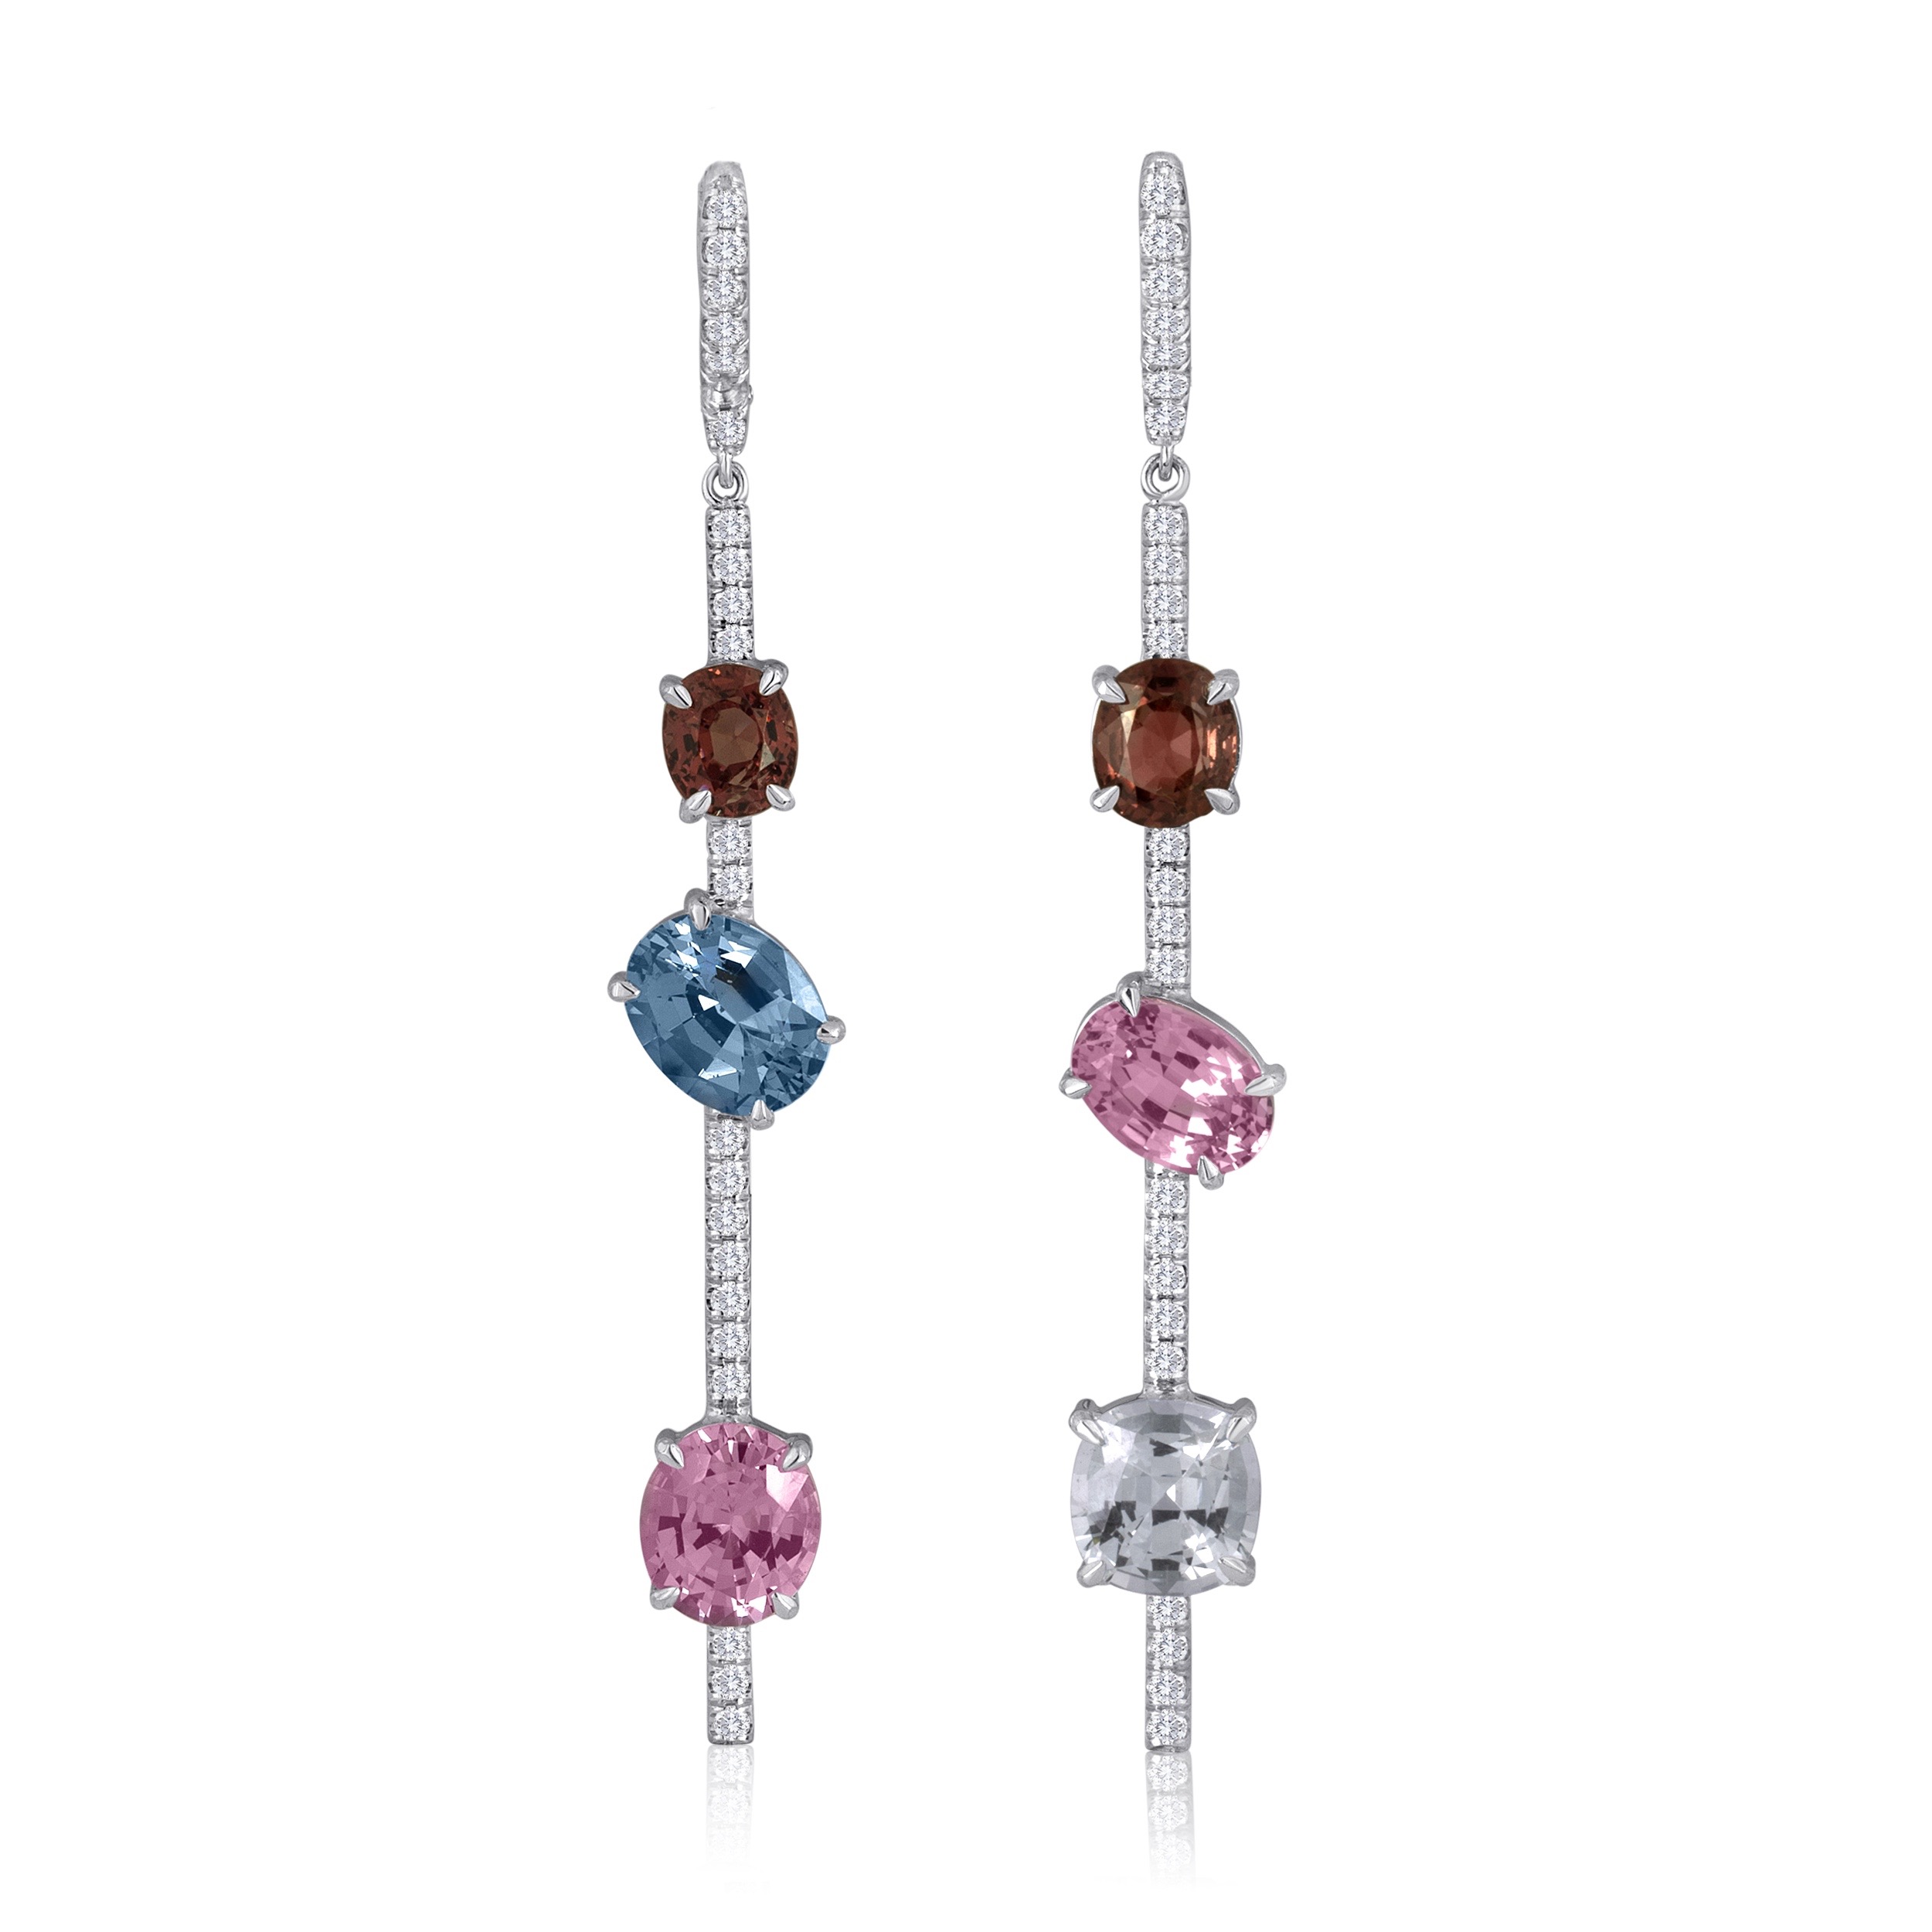 Asymmetric Spinel and Diamond Earrings